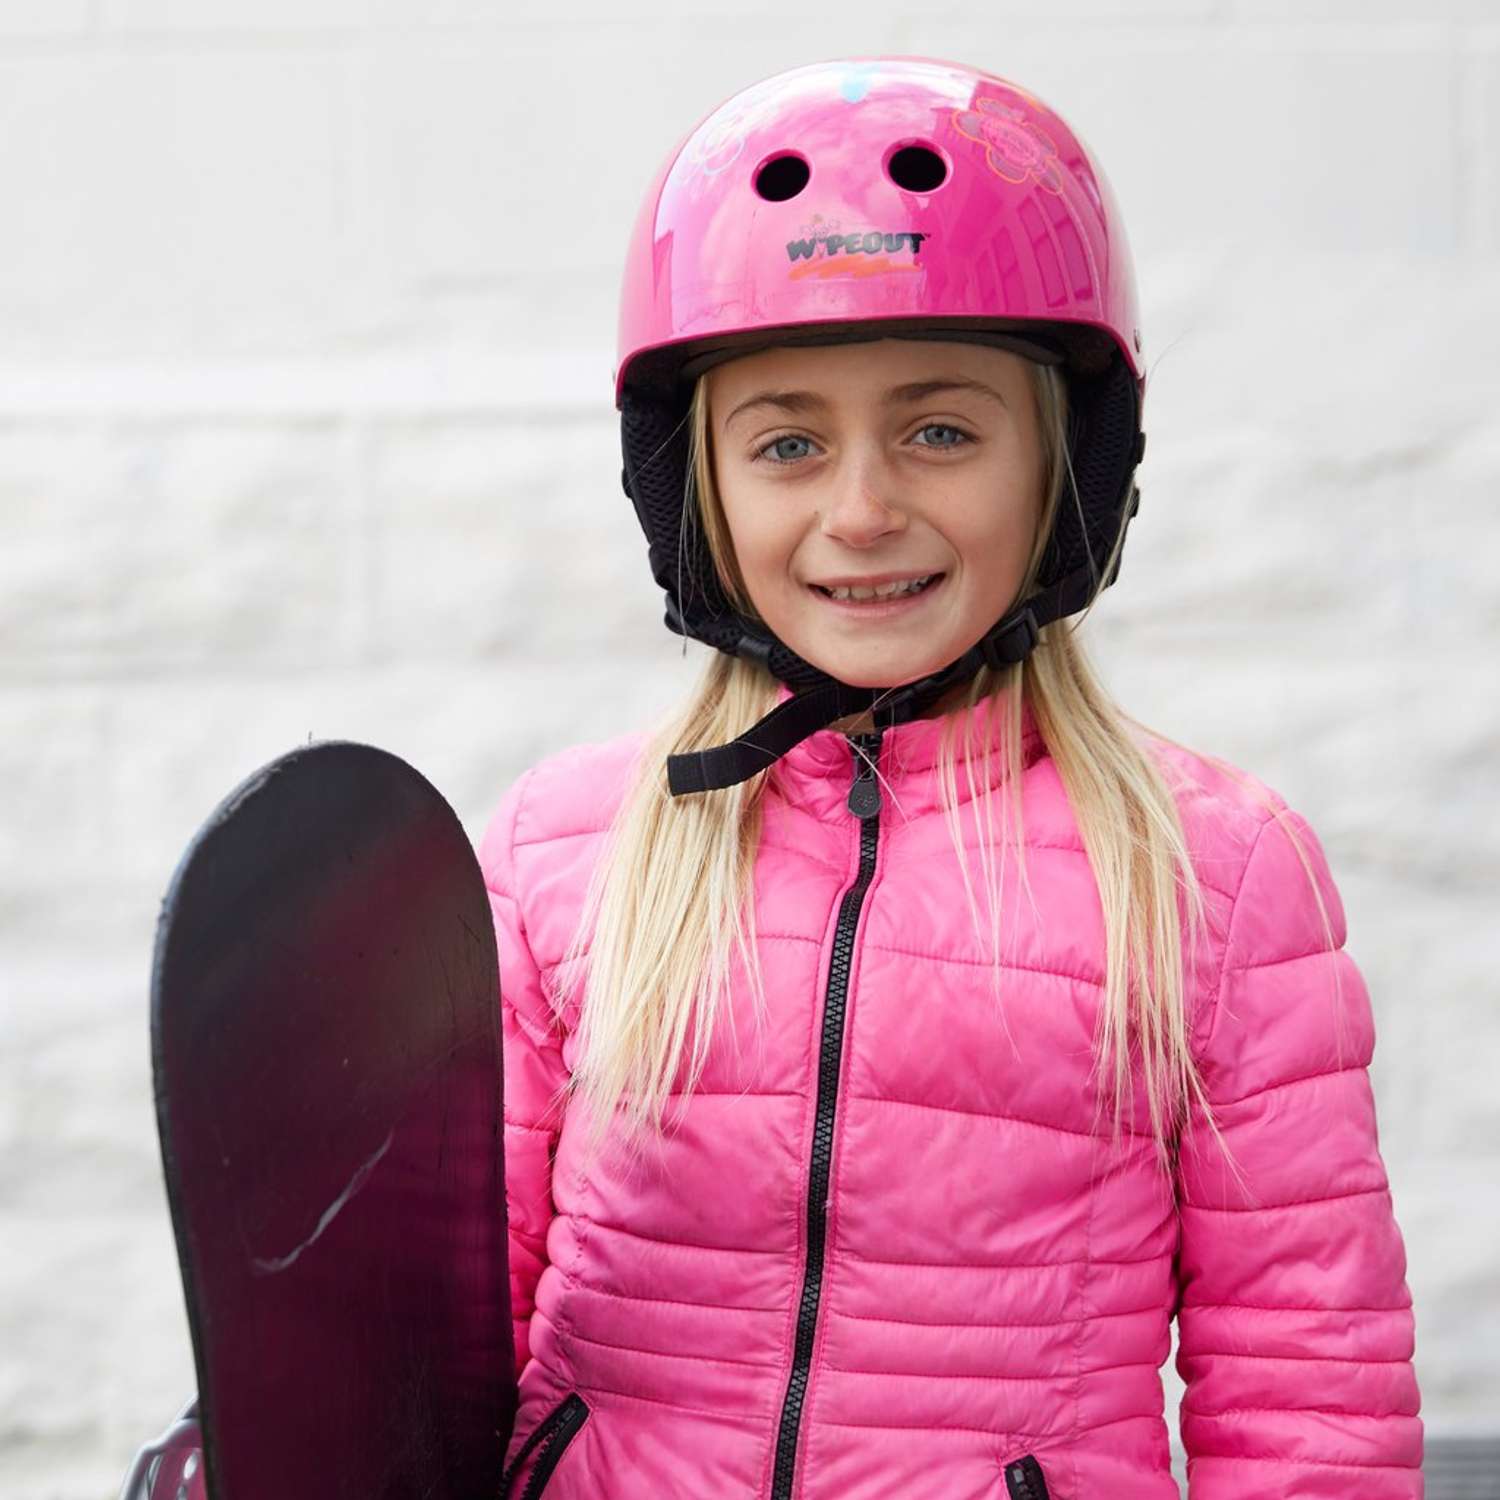 Шлем защитный WIPEOUT зимний с фломастерами Pink. Размер М 5+ - Розовый - фото 2